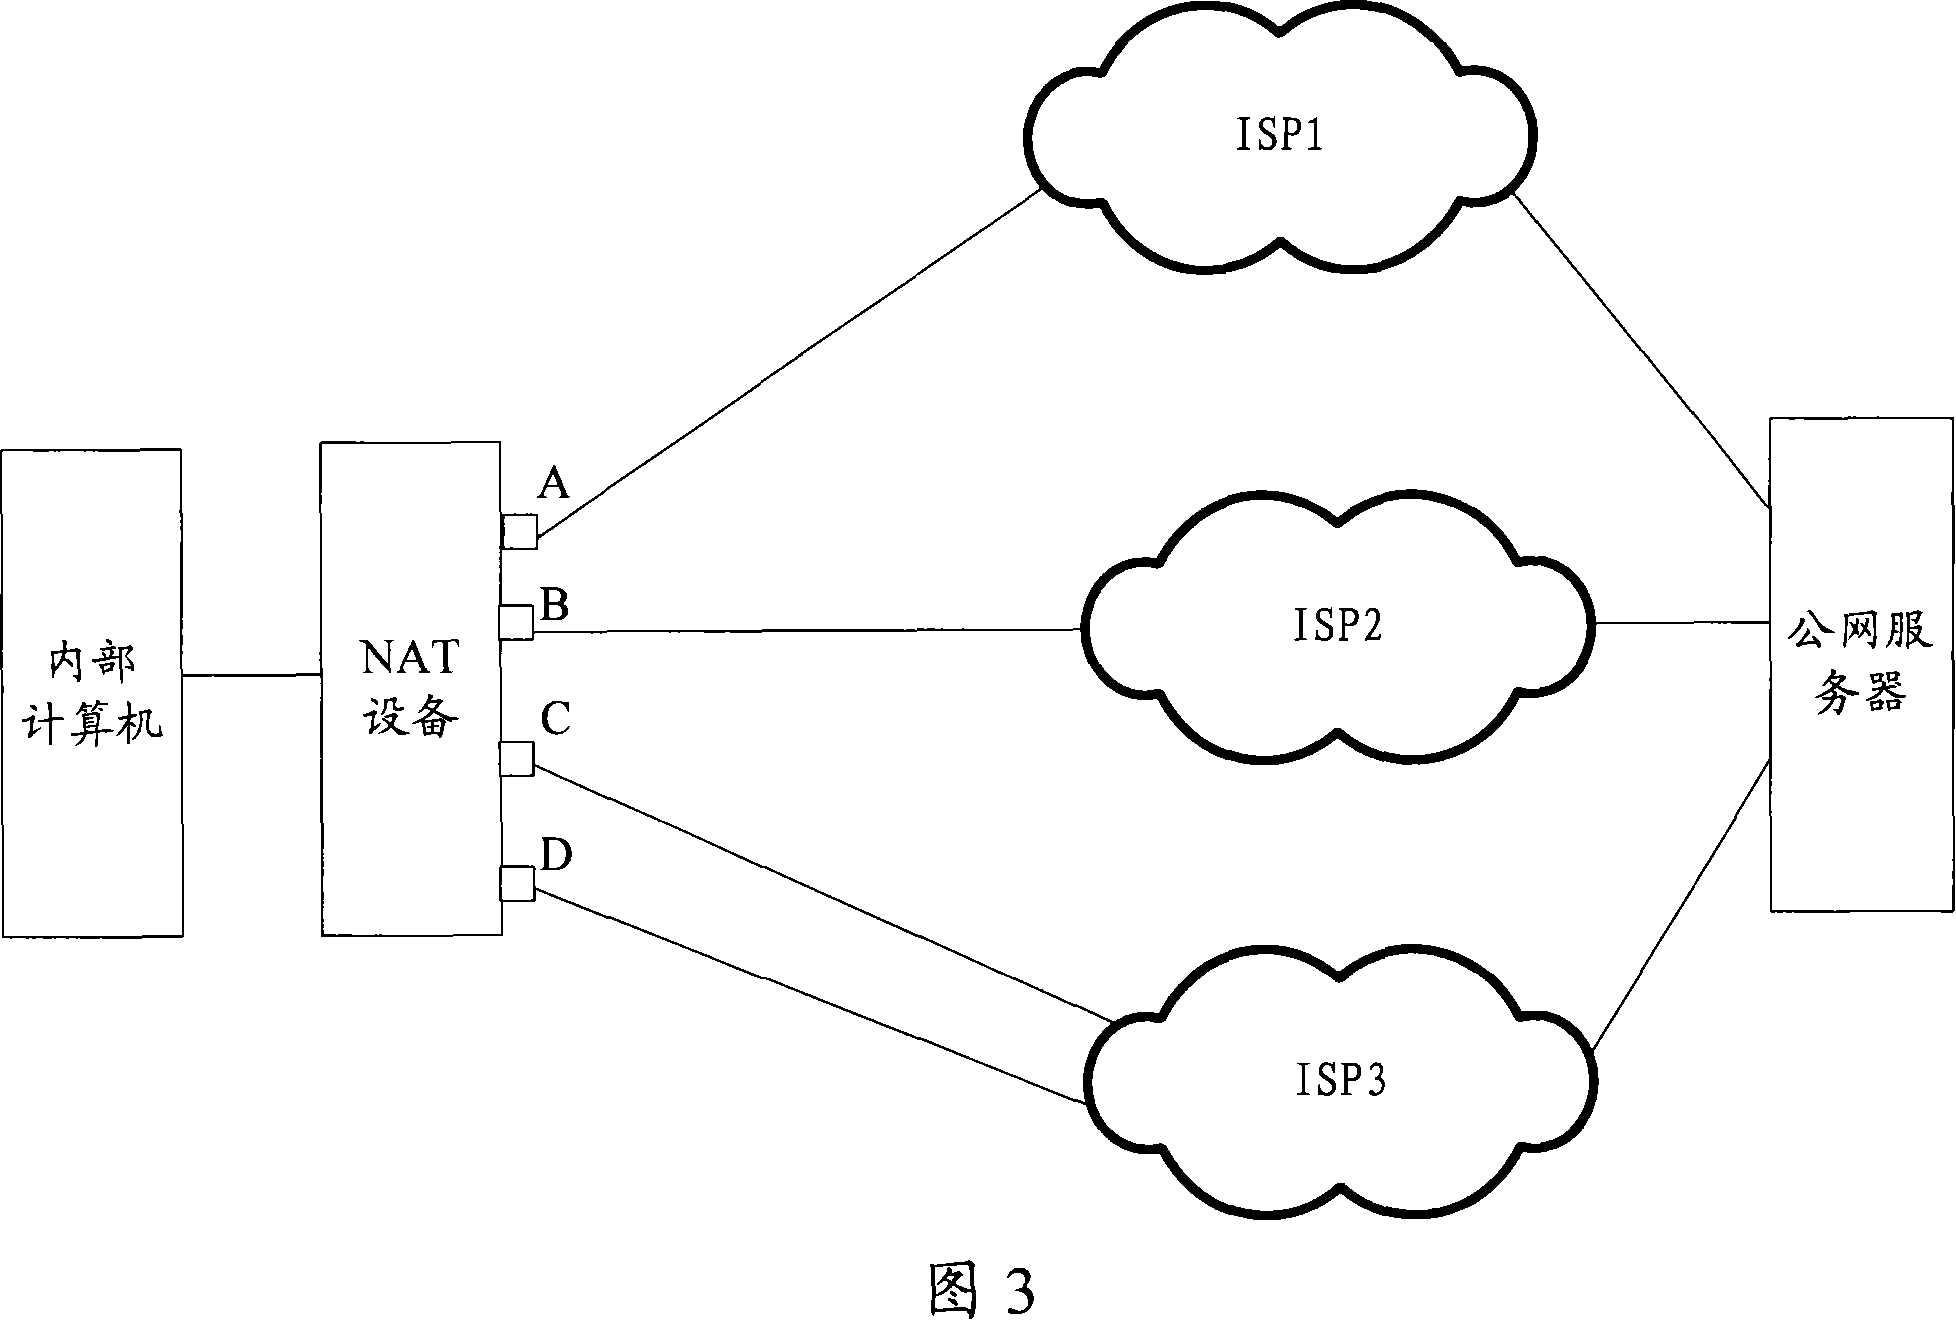 Network address converting attribute self-adaptive method and apparatus